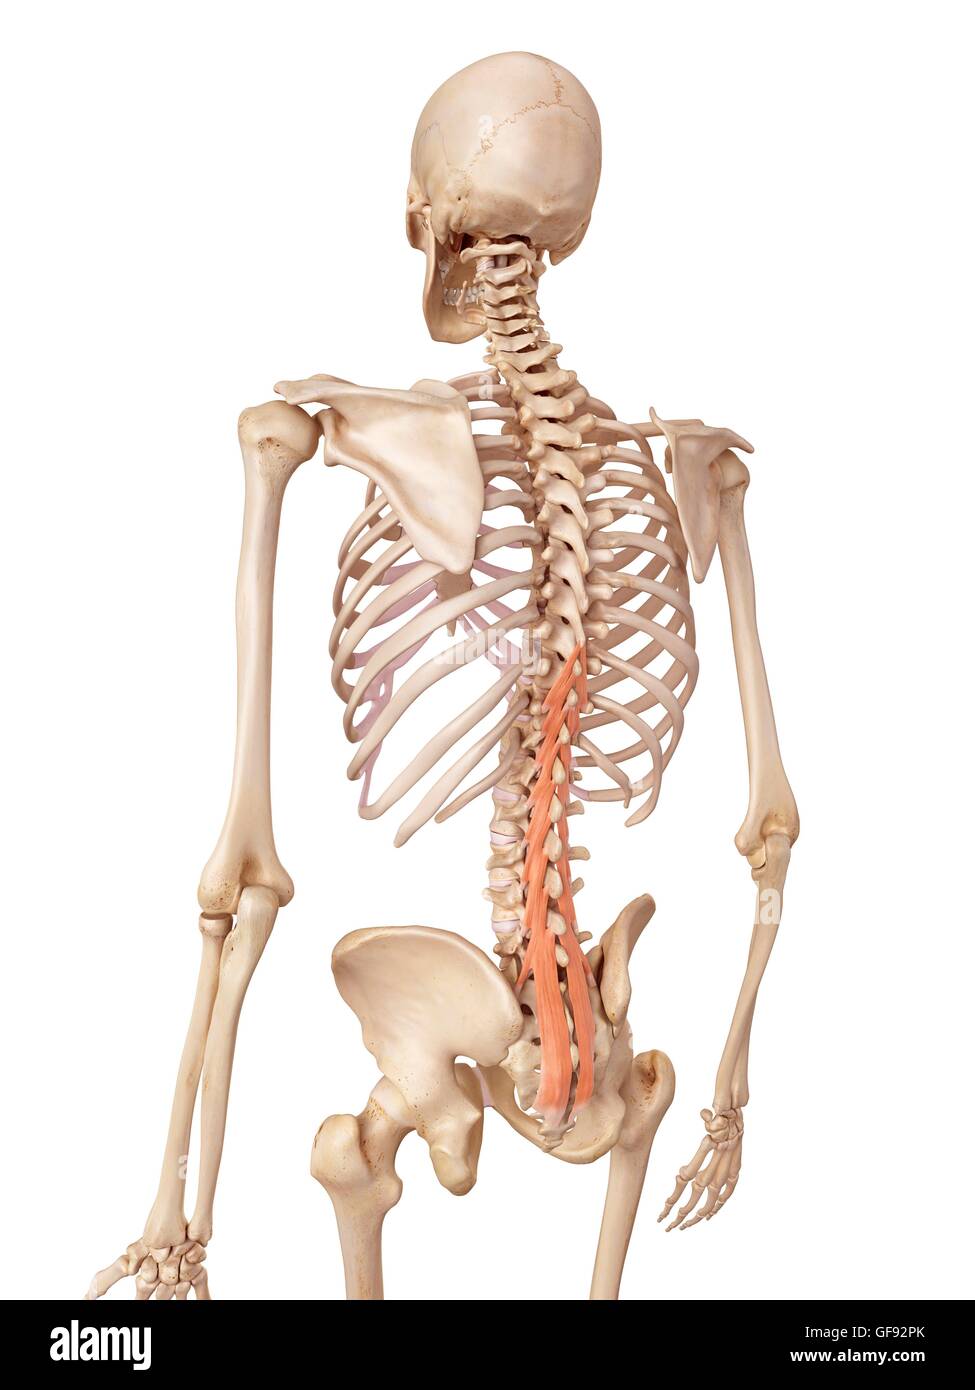 https://c8.alamy.com/comp/GF92PK/human-spine-muscles-illustration-GF92PK.jpg